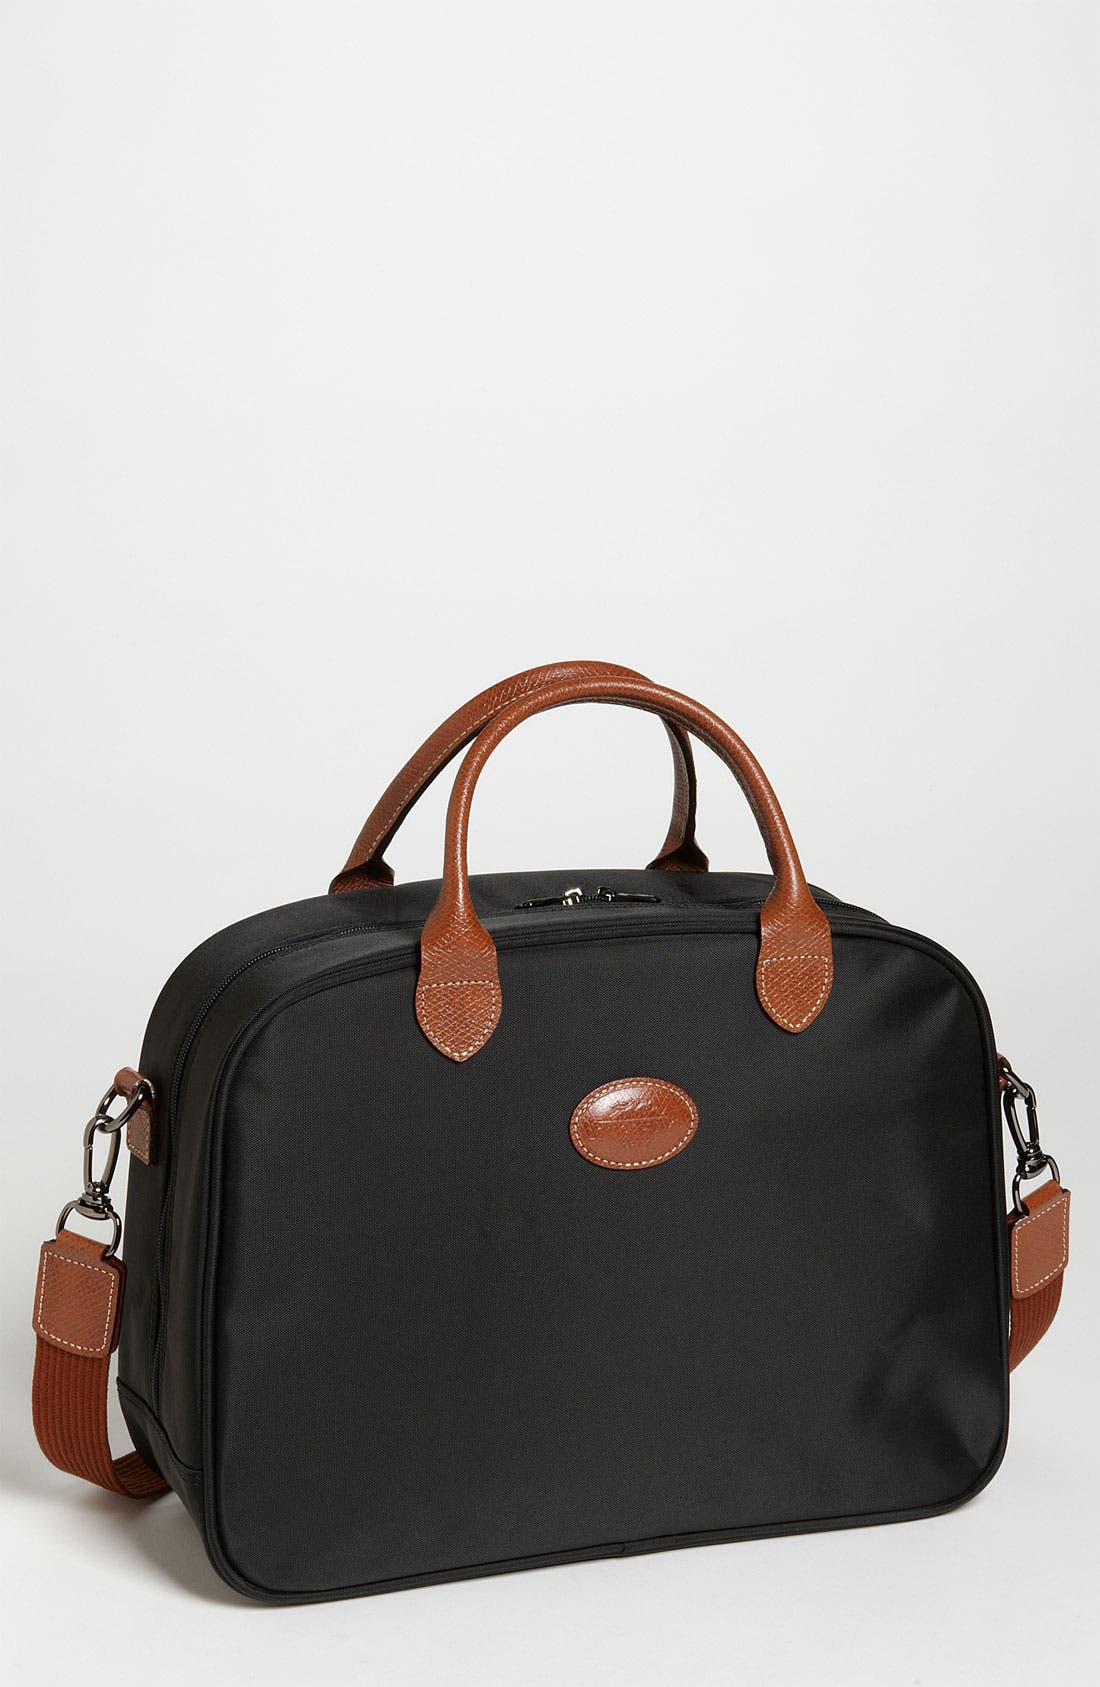 Longchamp 'Le Pliage' Travel Bag 